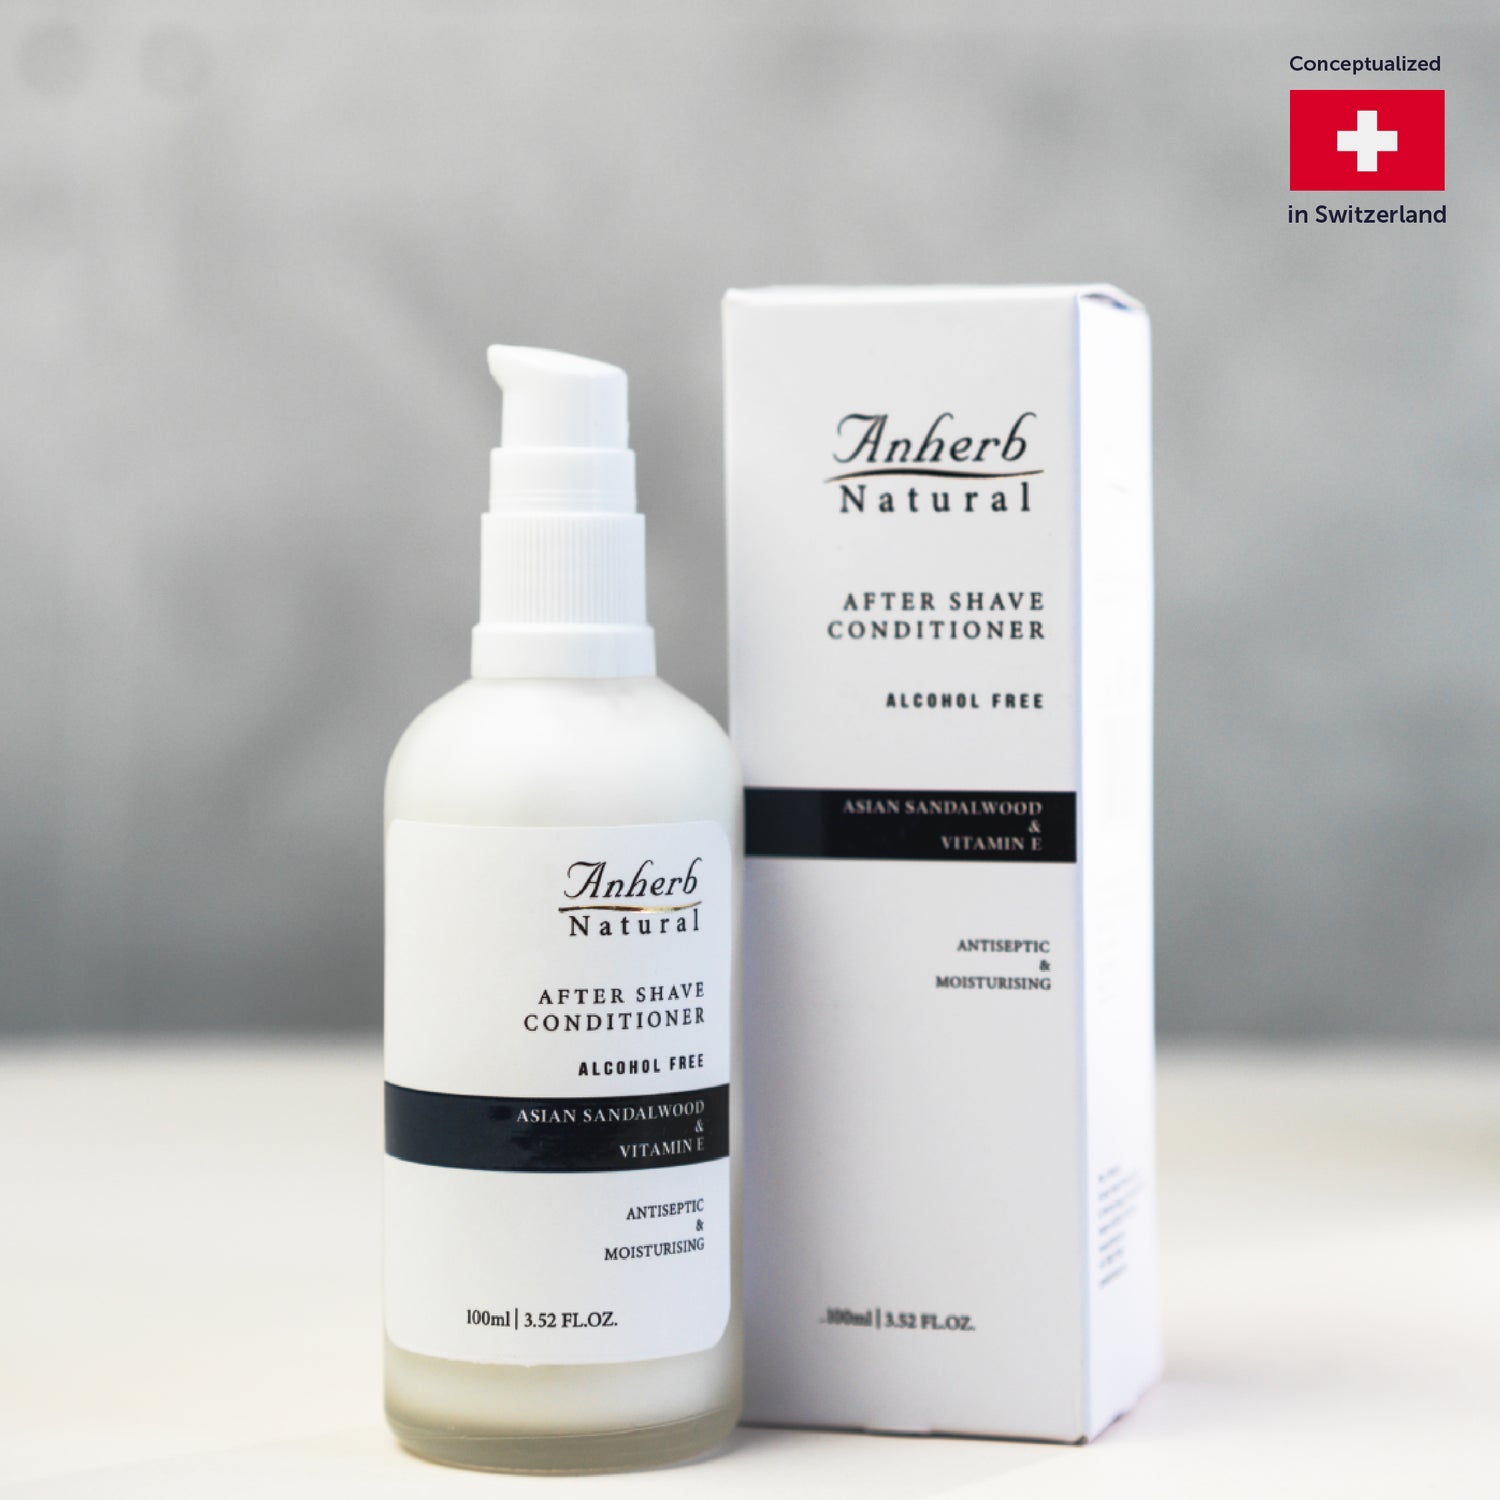 Anherb Natural Premium After Shave Conditioner - 100ml | Asian Sandalwood &amp; Vitamin E Formula | Alcohol-Free, Antiseptic, Anti-Inflammatory